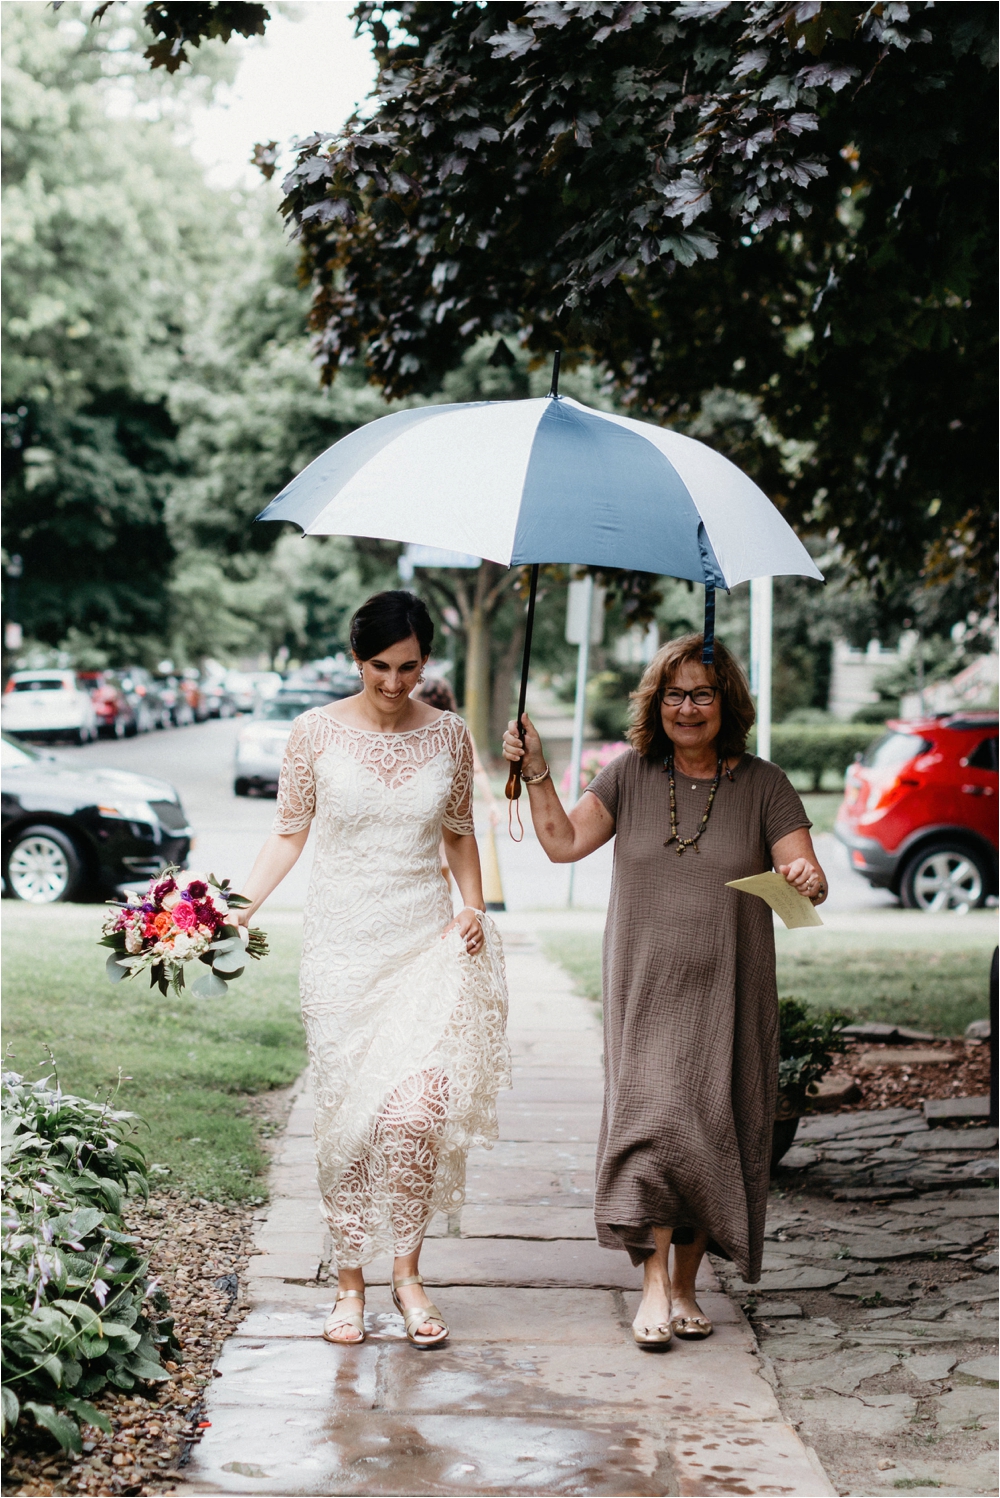 Rue De Seine bridal gown a bright colorful bouquet | Burchfield Penney Wedding in Buffalo, New York